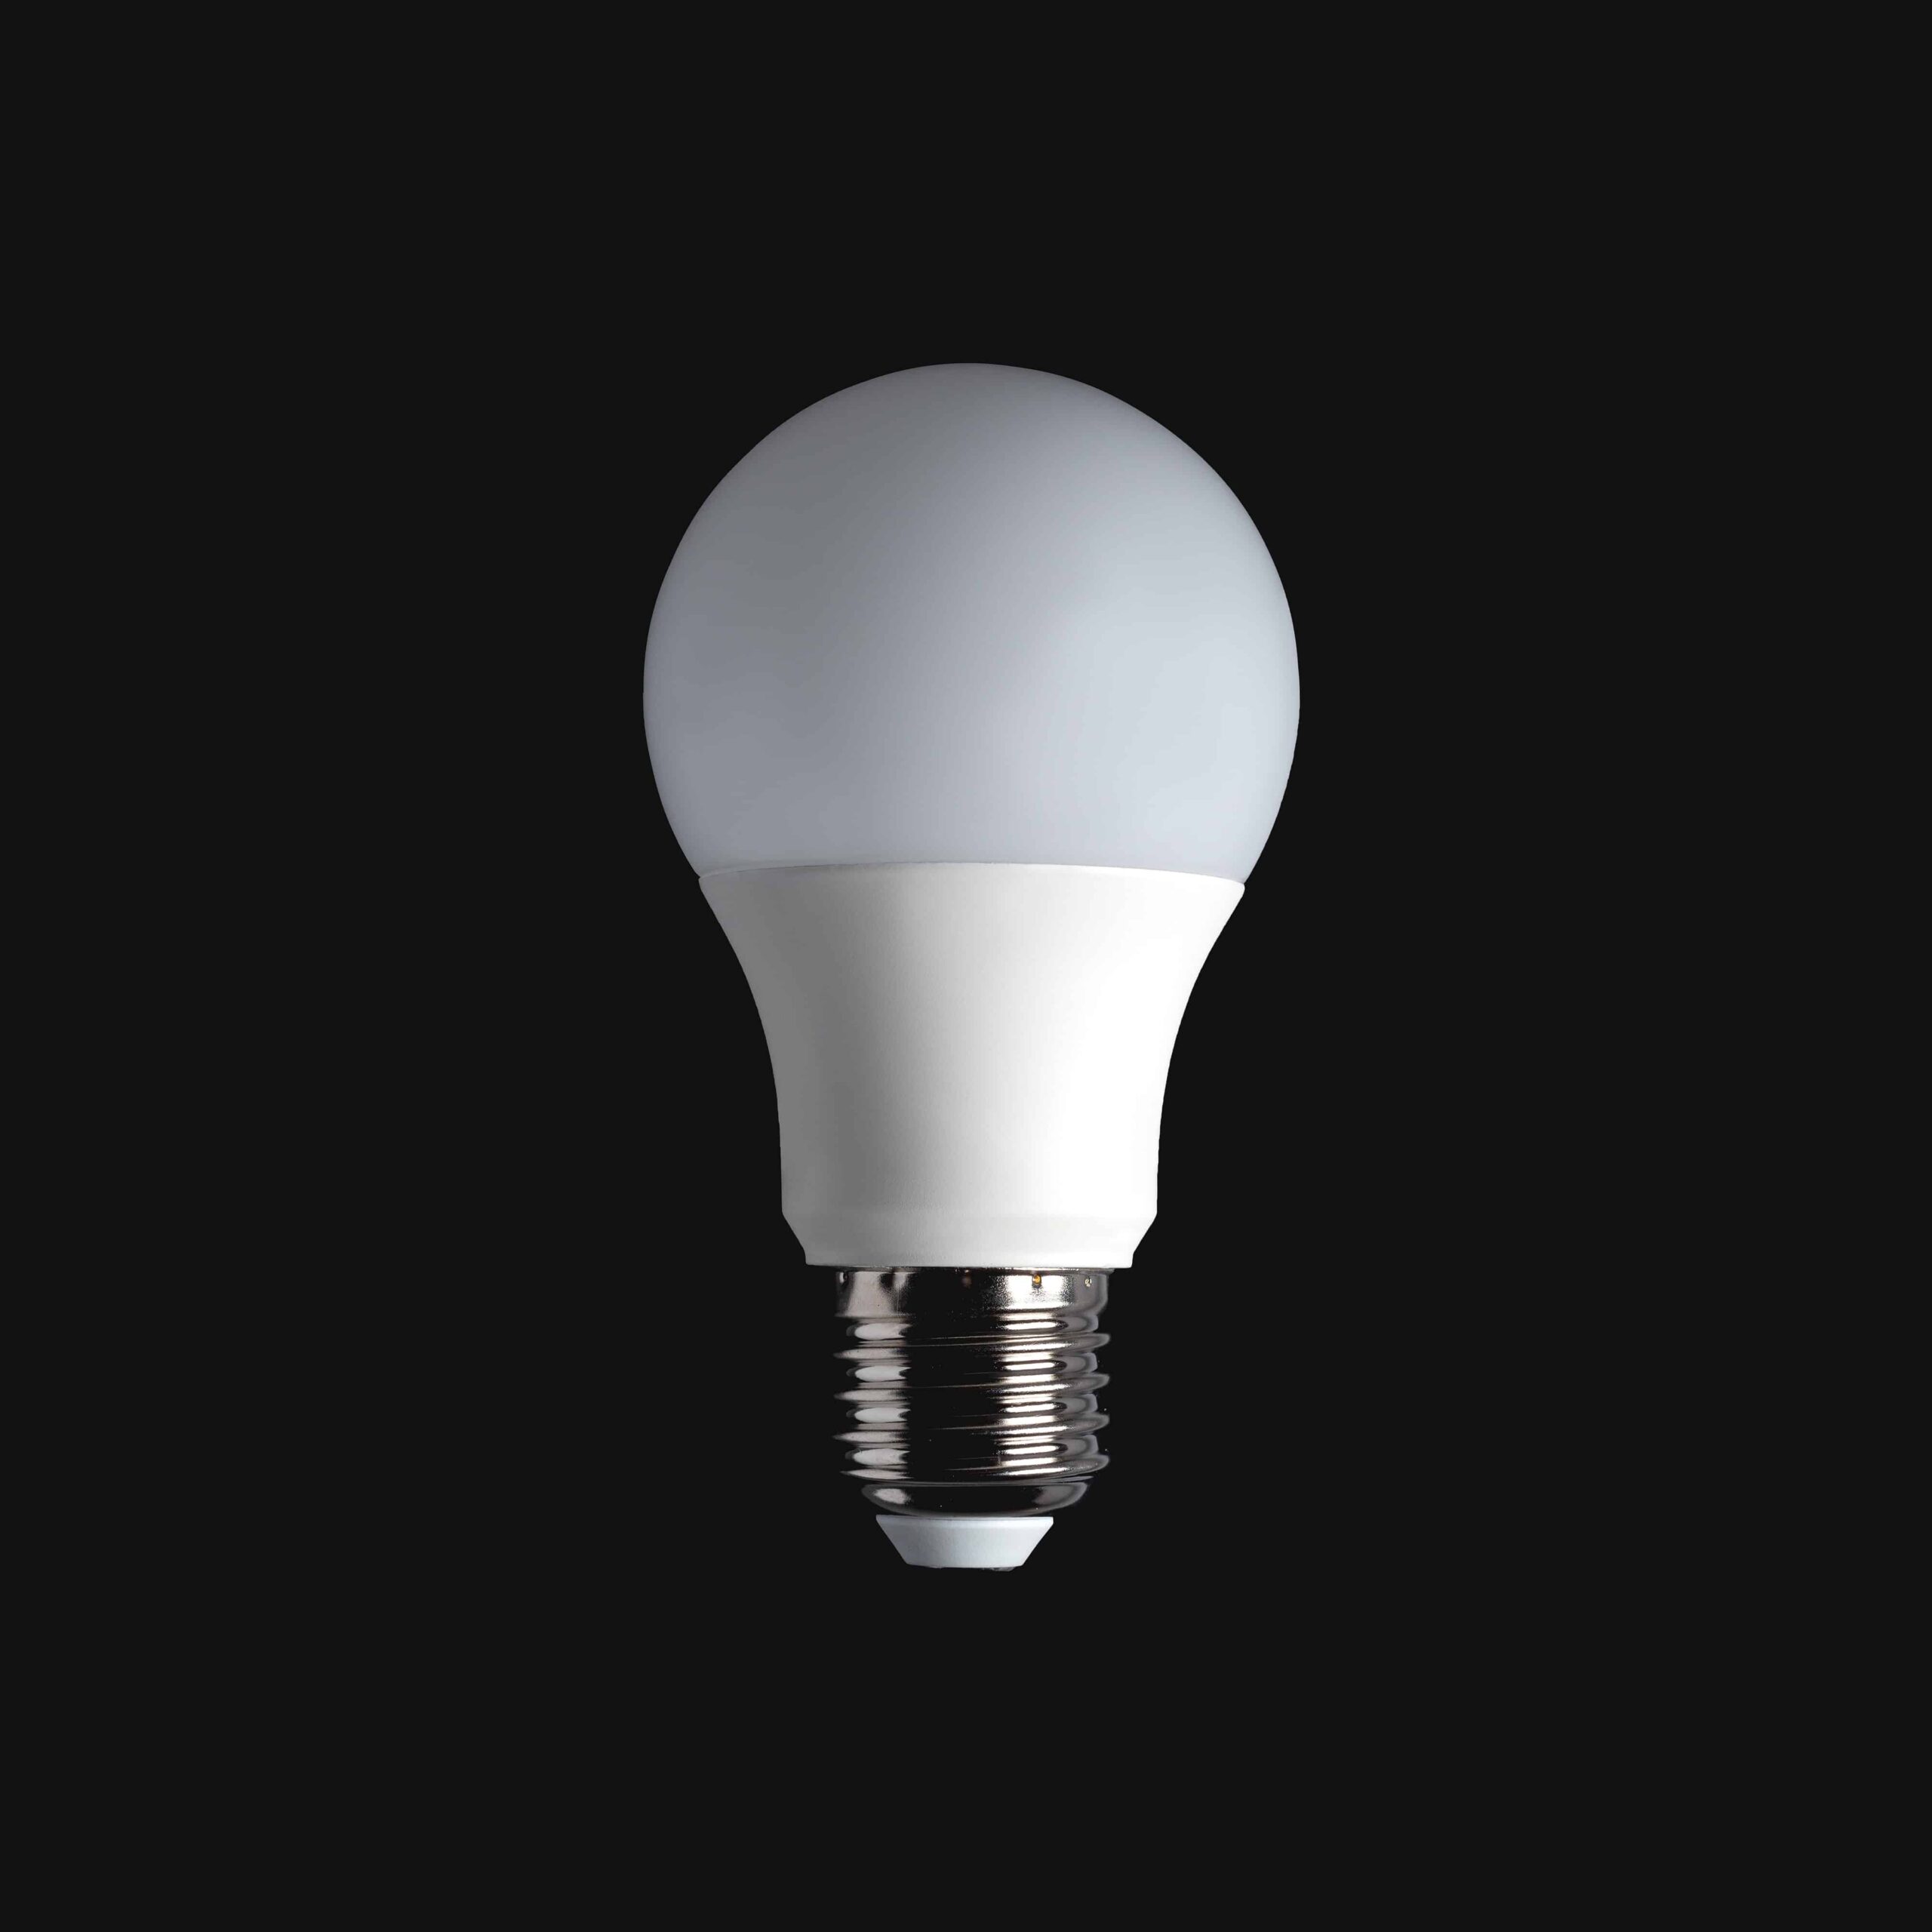 LED dimmable light bulb